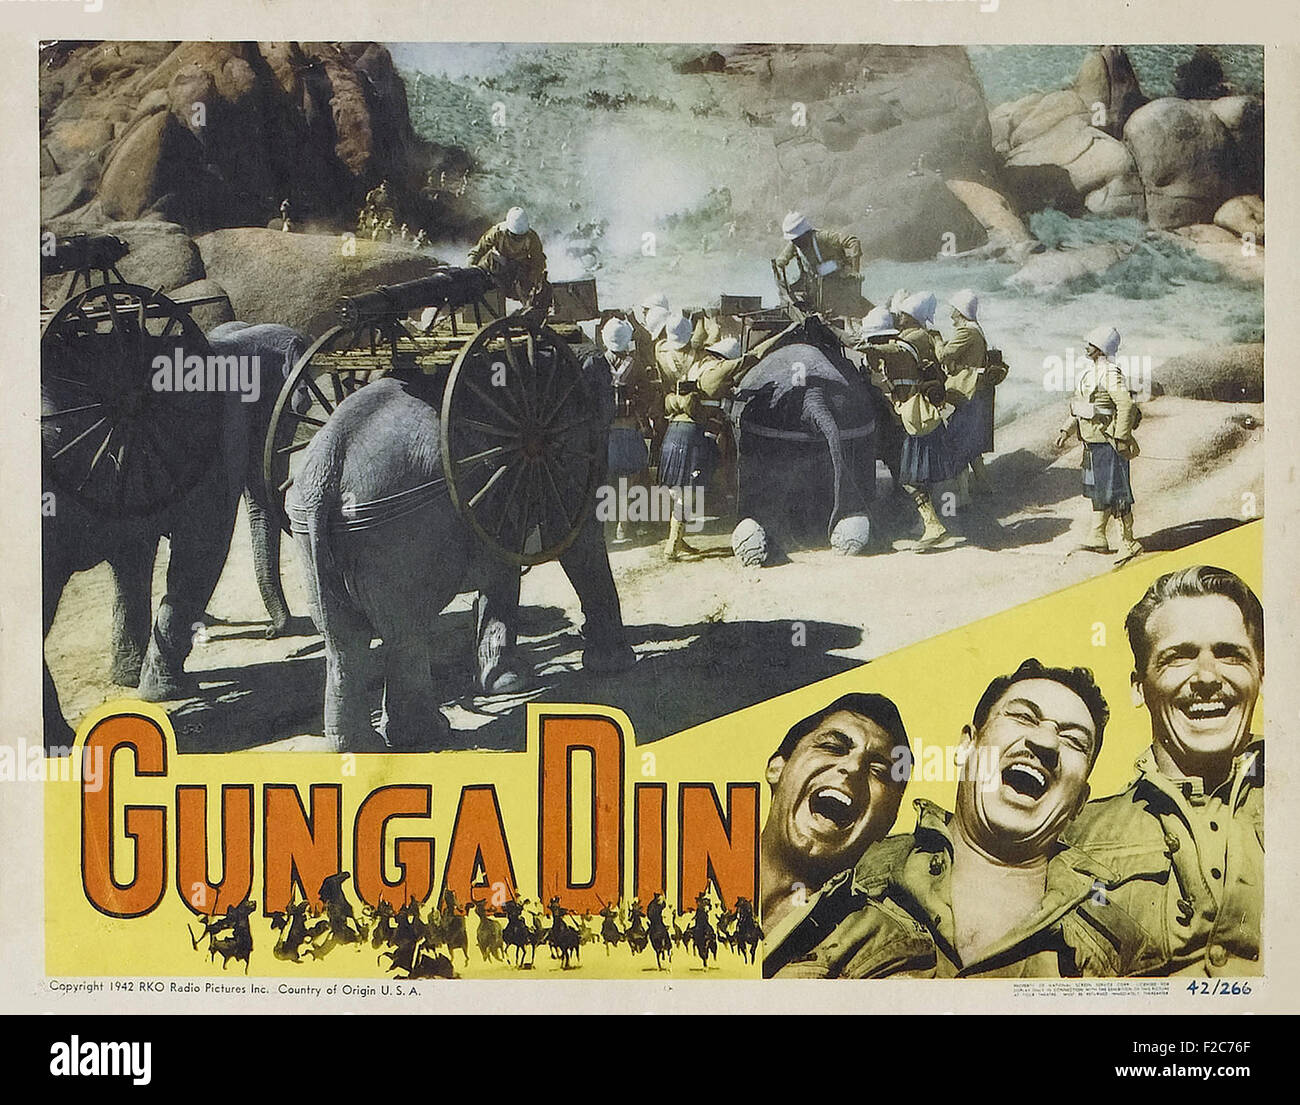 Gunga Din   16 - Movie Poster Stock Photo